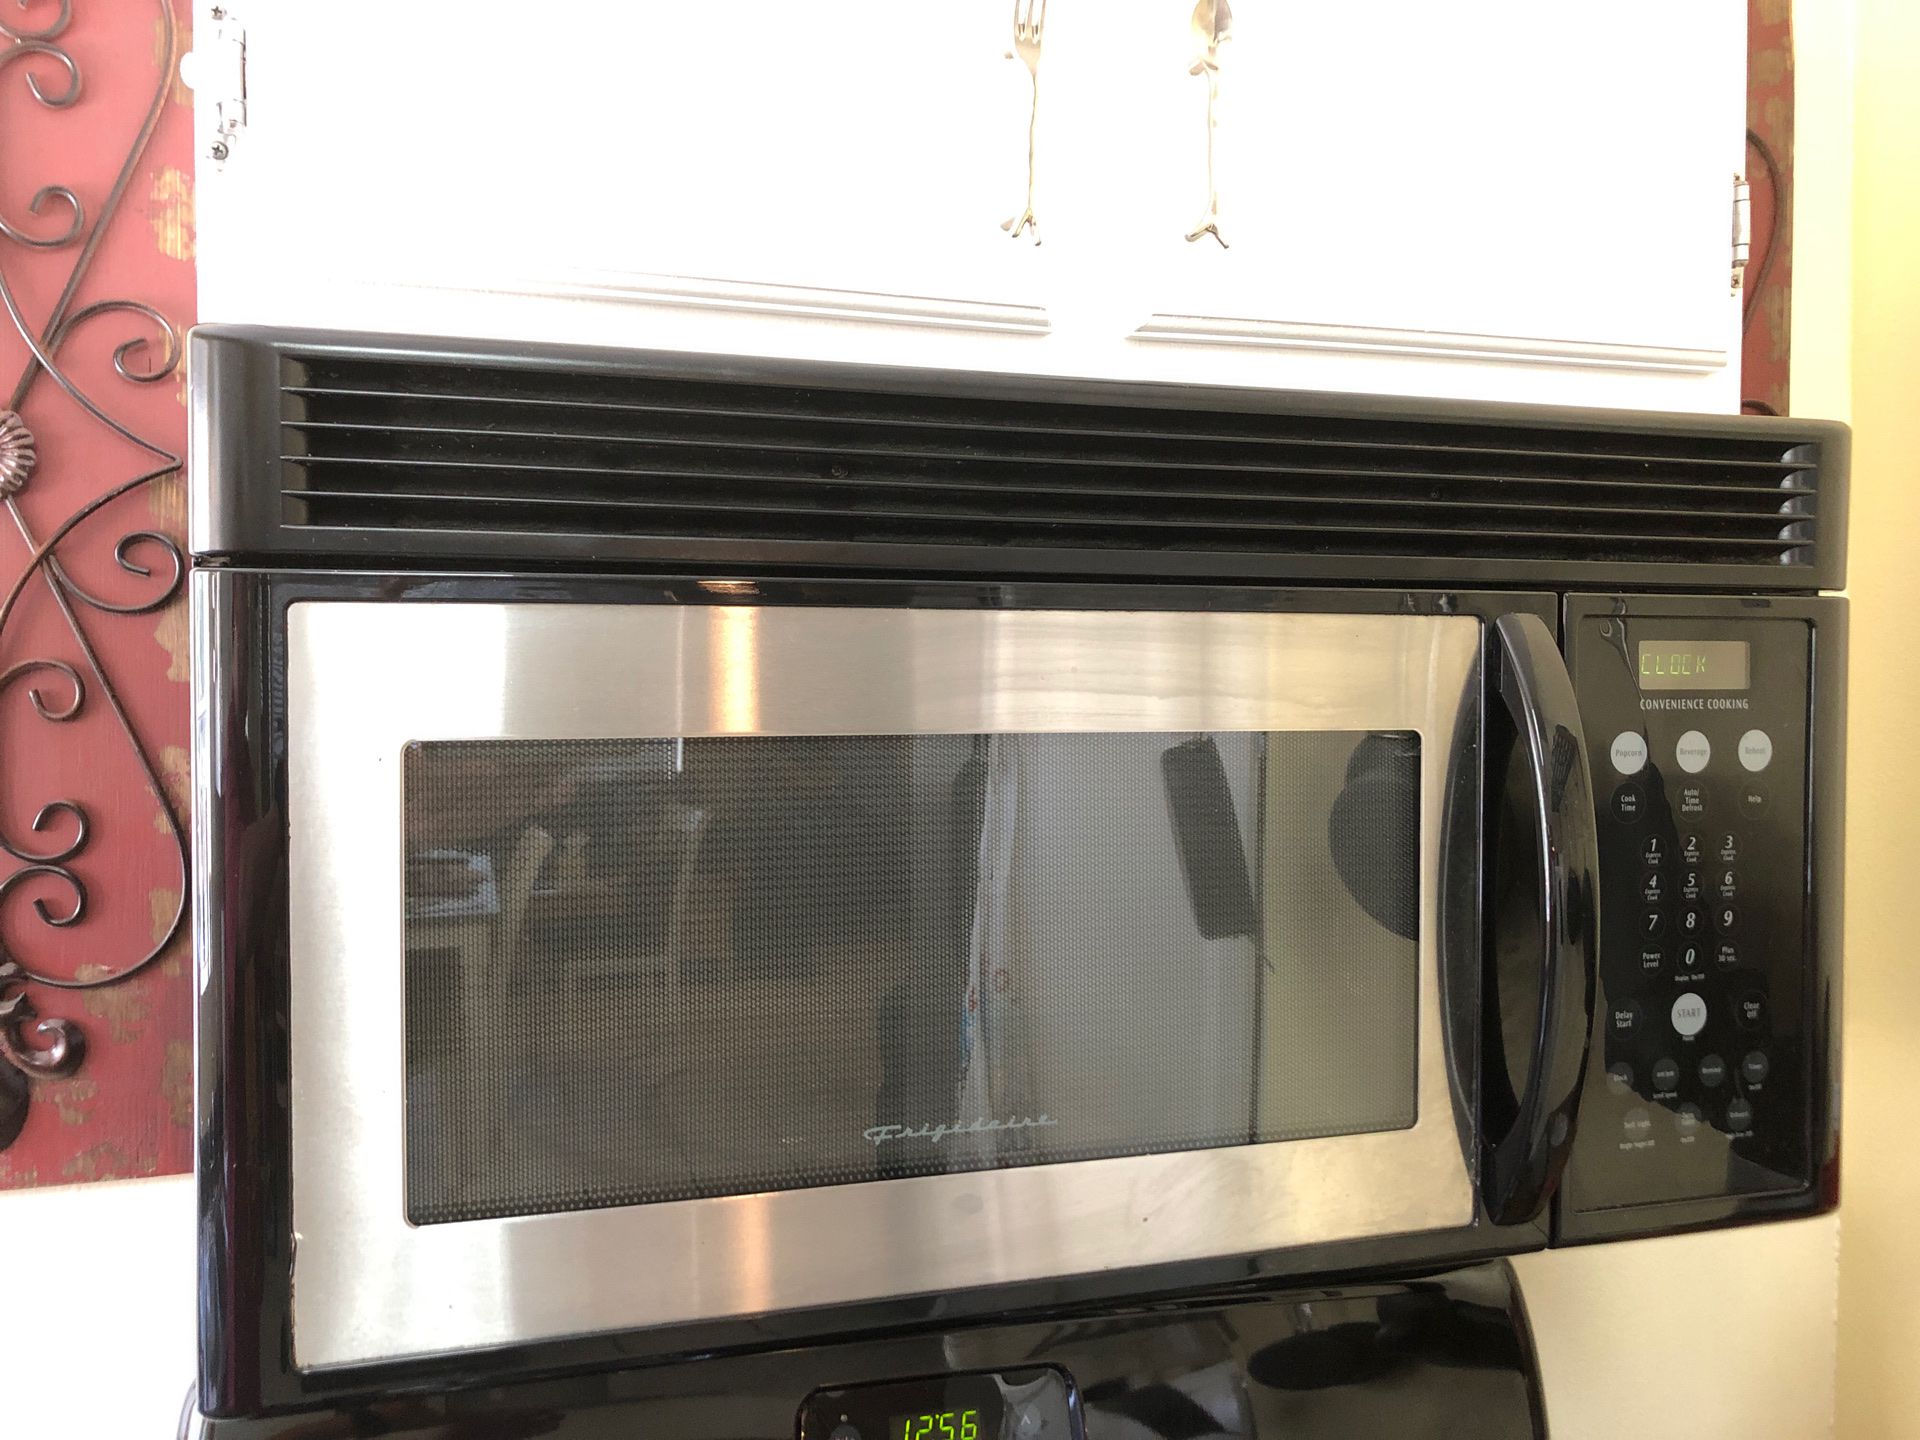 Frigidaire microwave and range